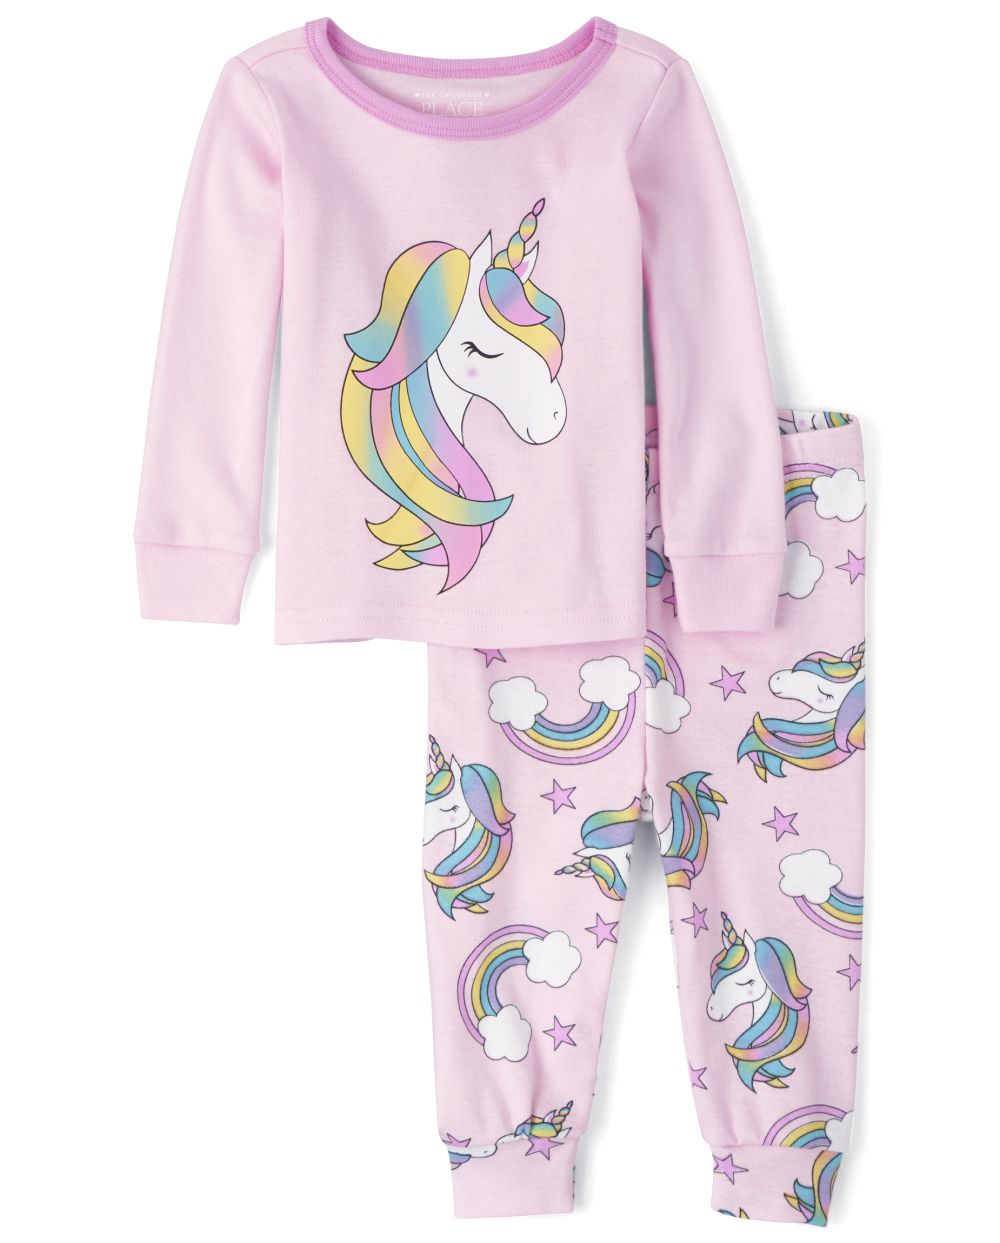 Baby And Toddler Girls Long Sleeve Rainbow Unicorn Snug Fit Cotton Pajamas